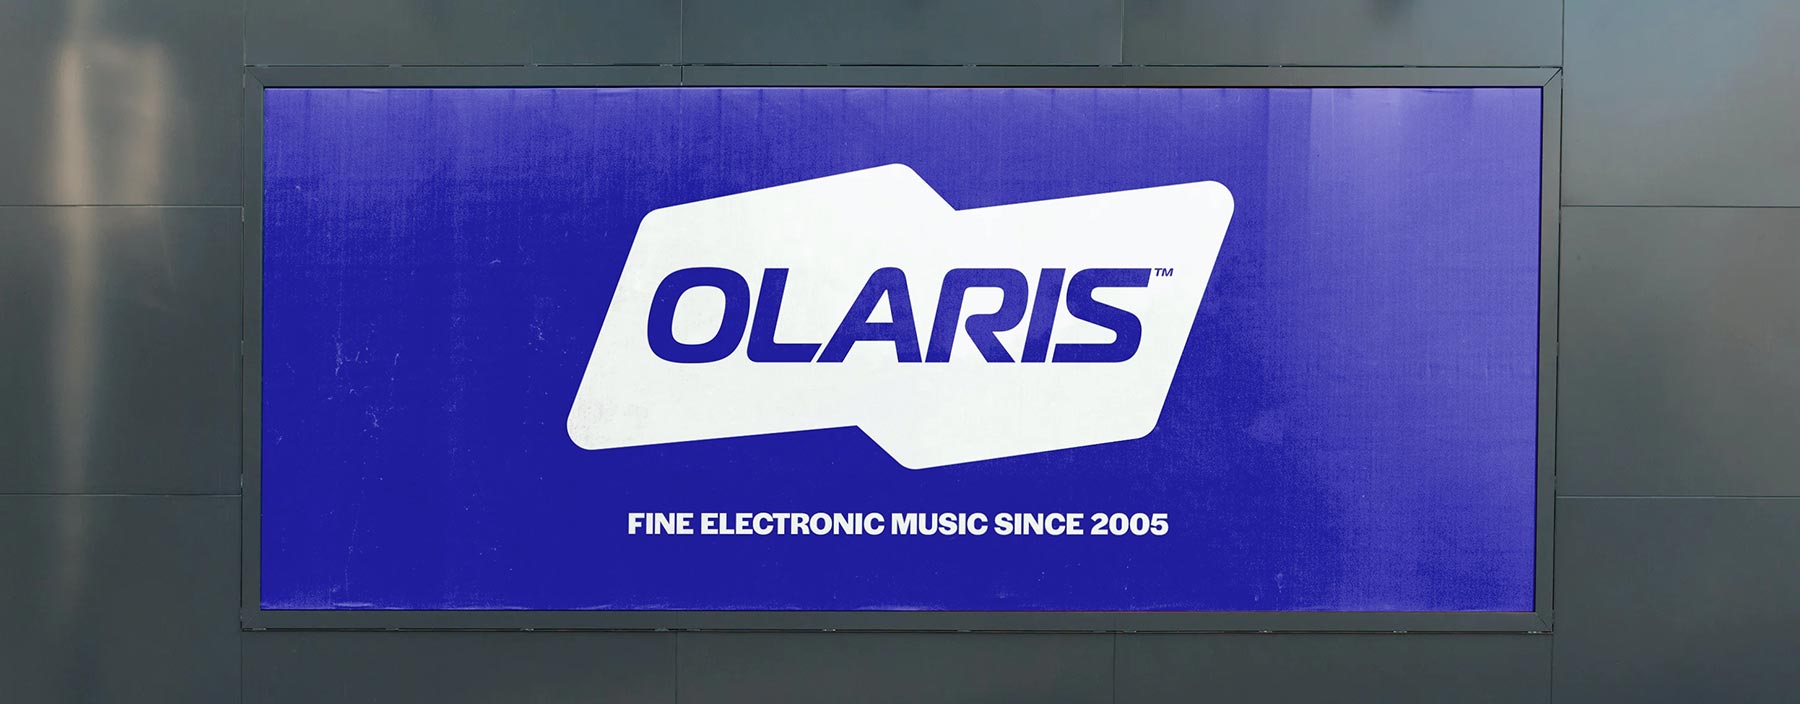 Olaris Records - Fine Electronic Music since 2005